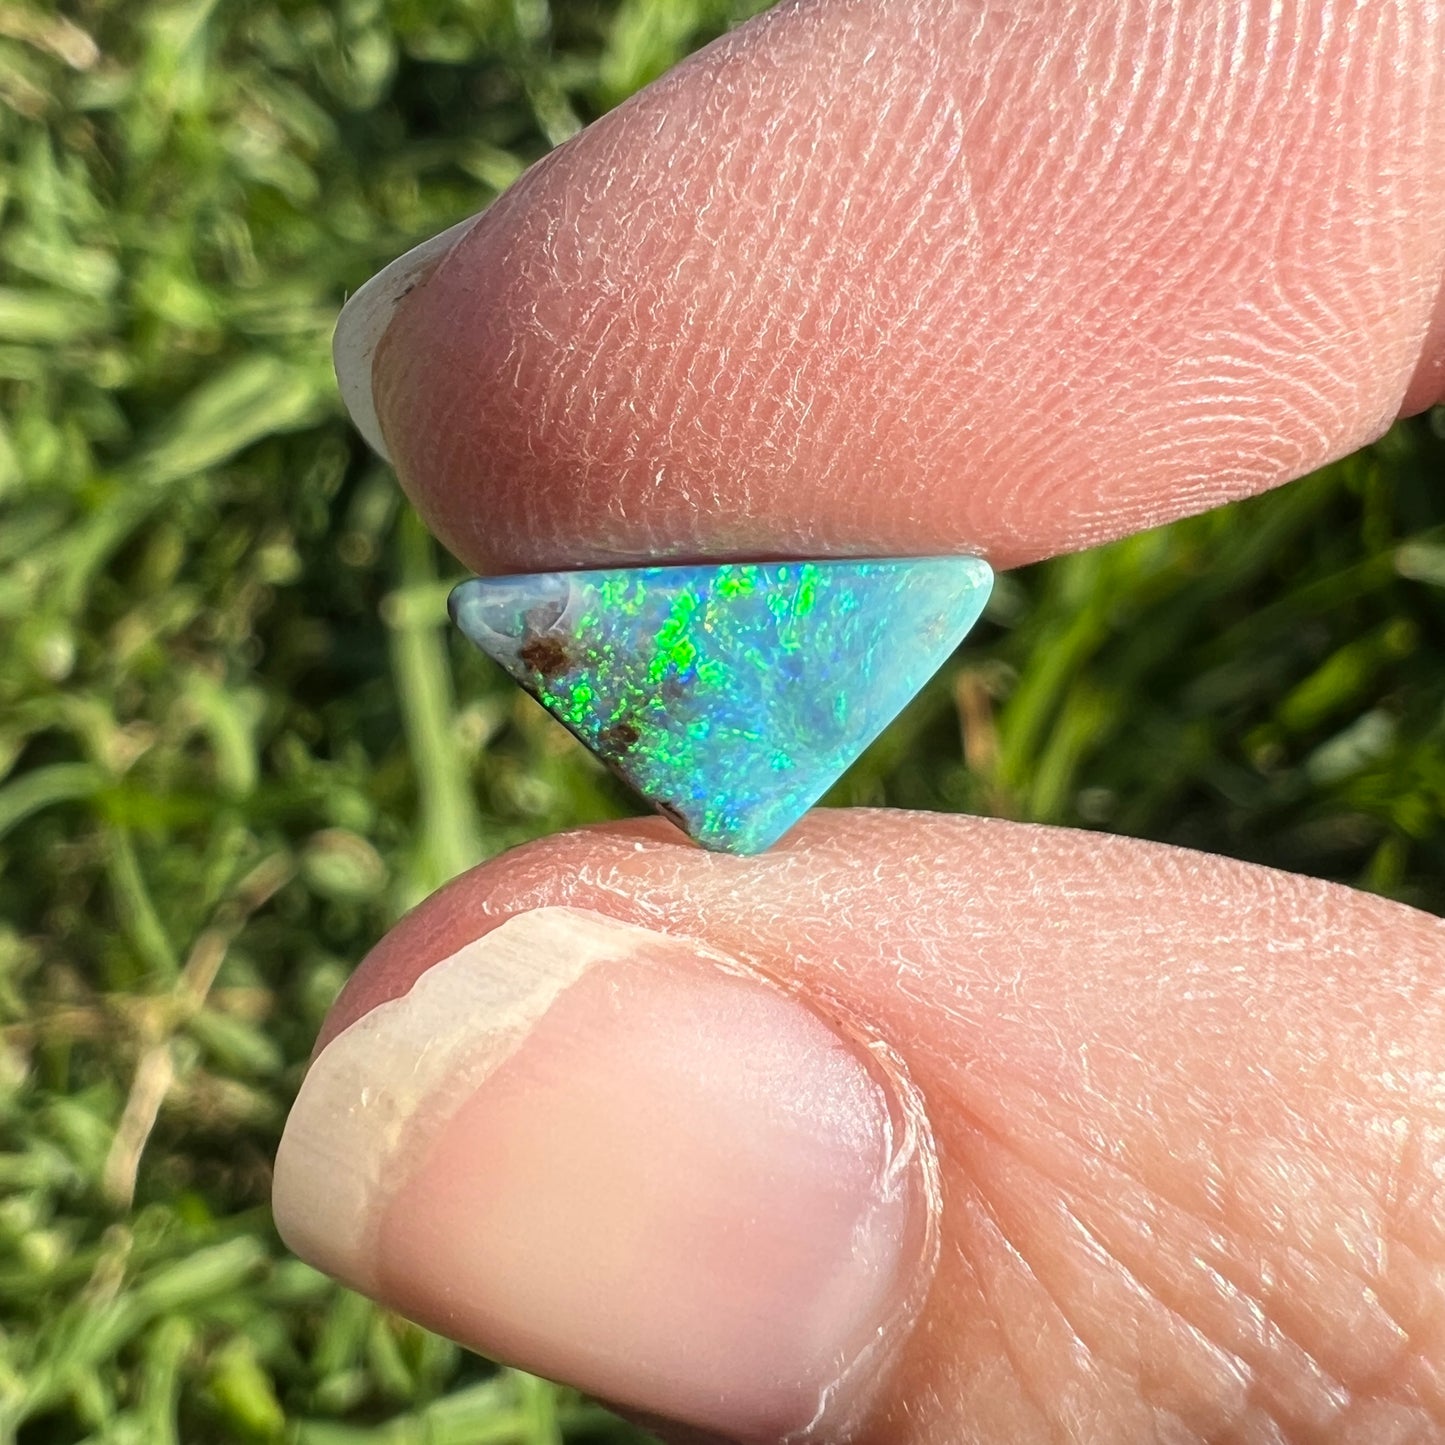 0.97 Ct small boulder opal